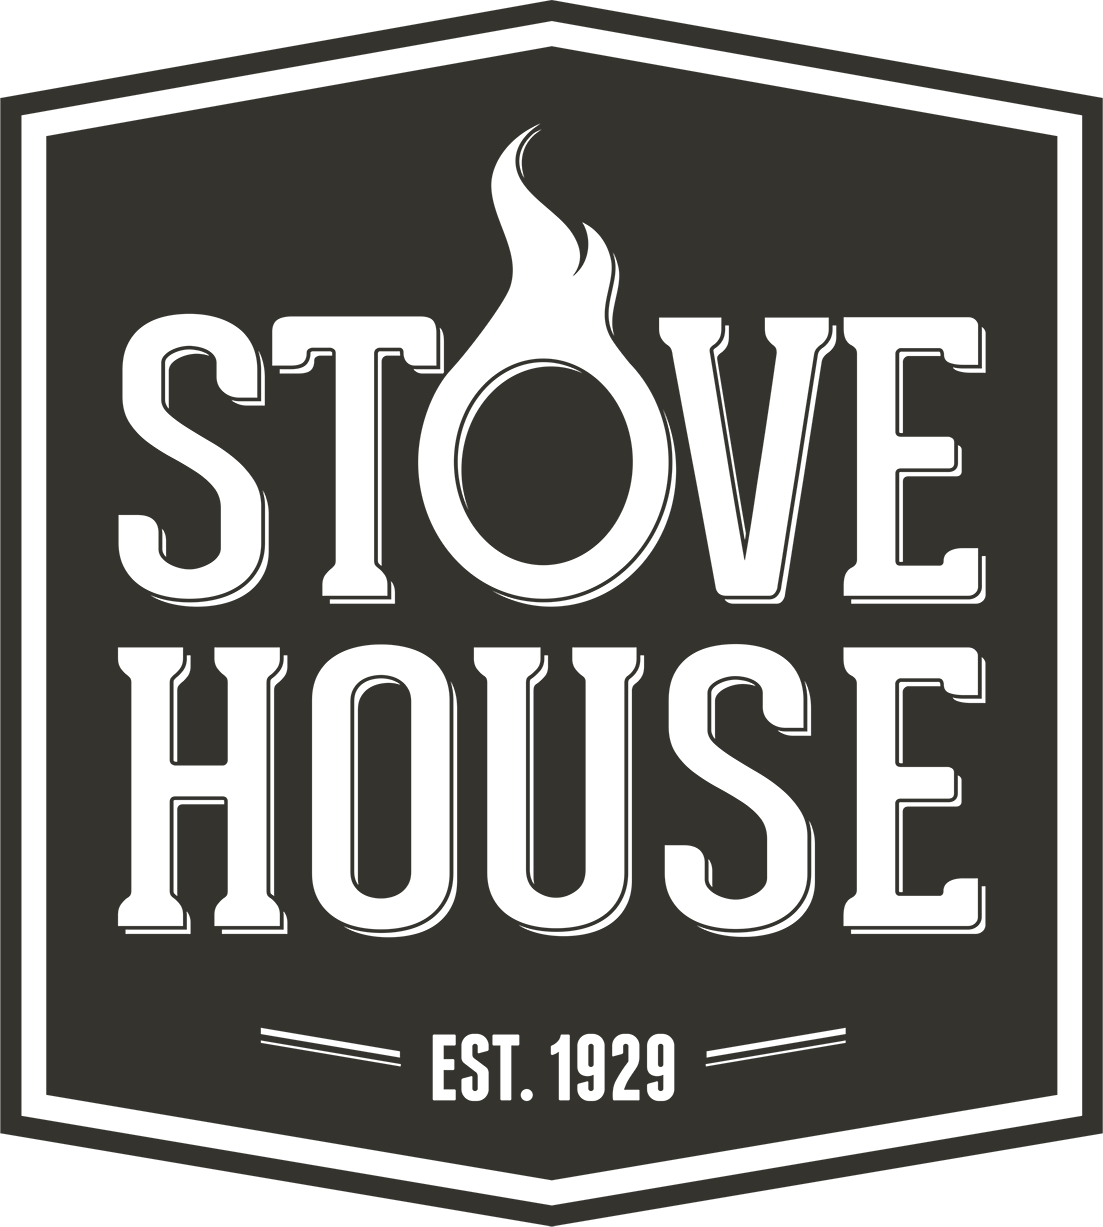 Stovehouse